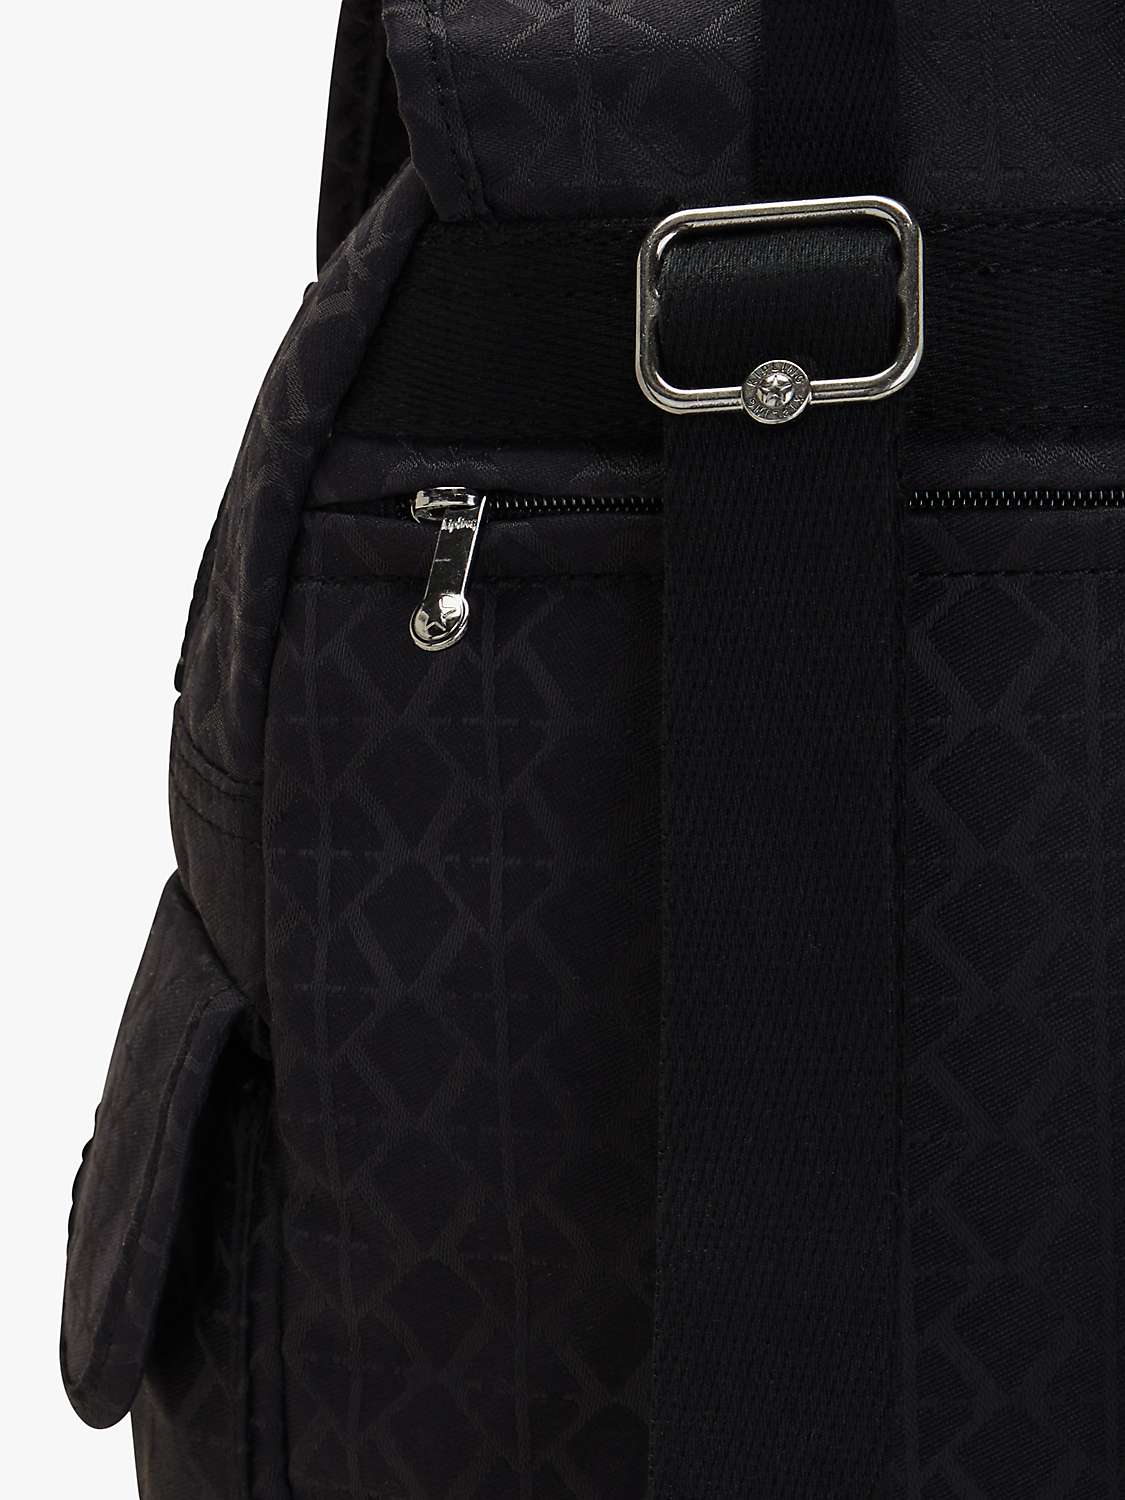 Buy Kipling City Pack Small Backpack Online at johnlewis.com